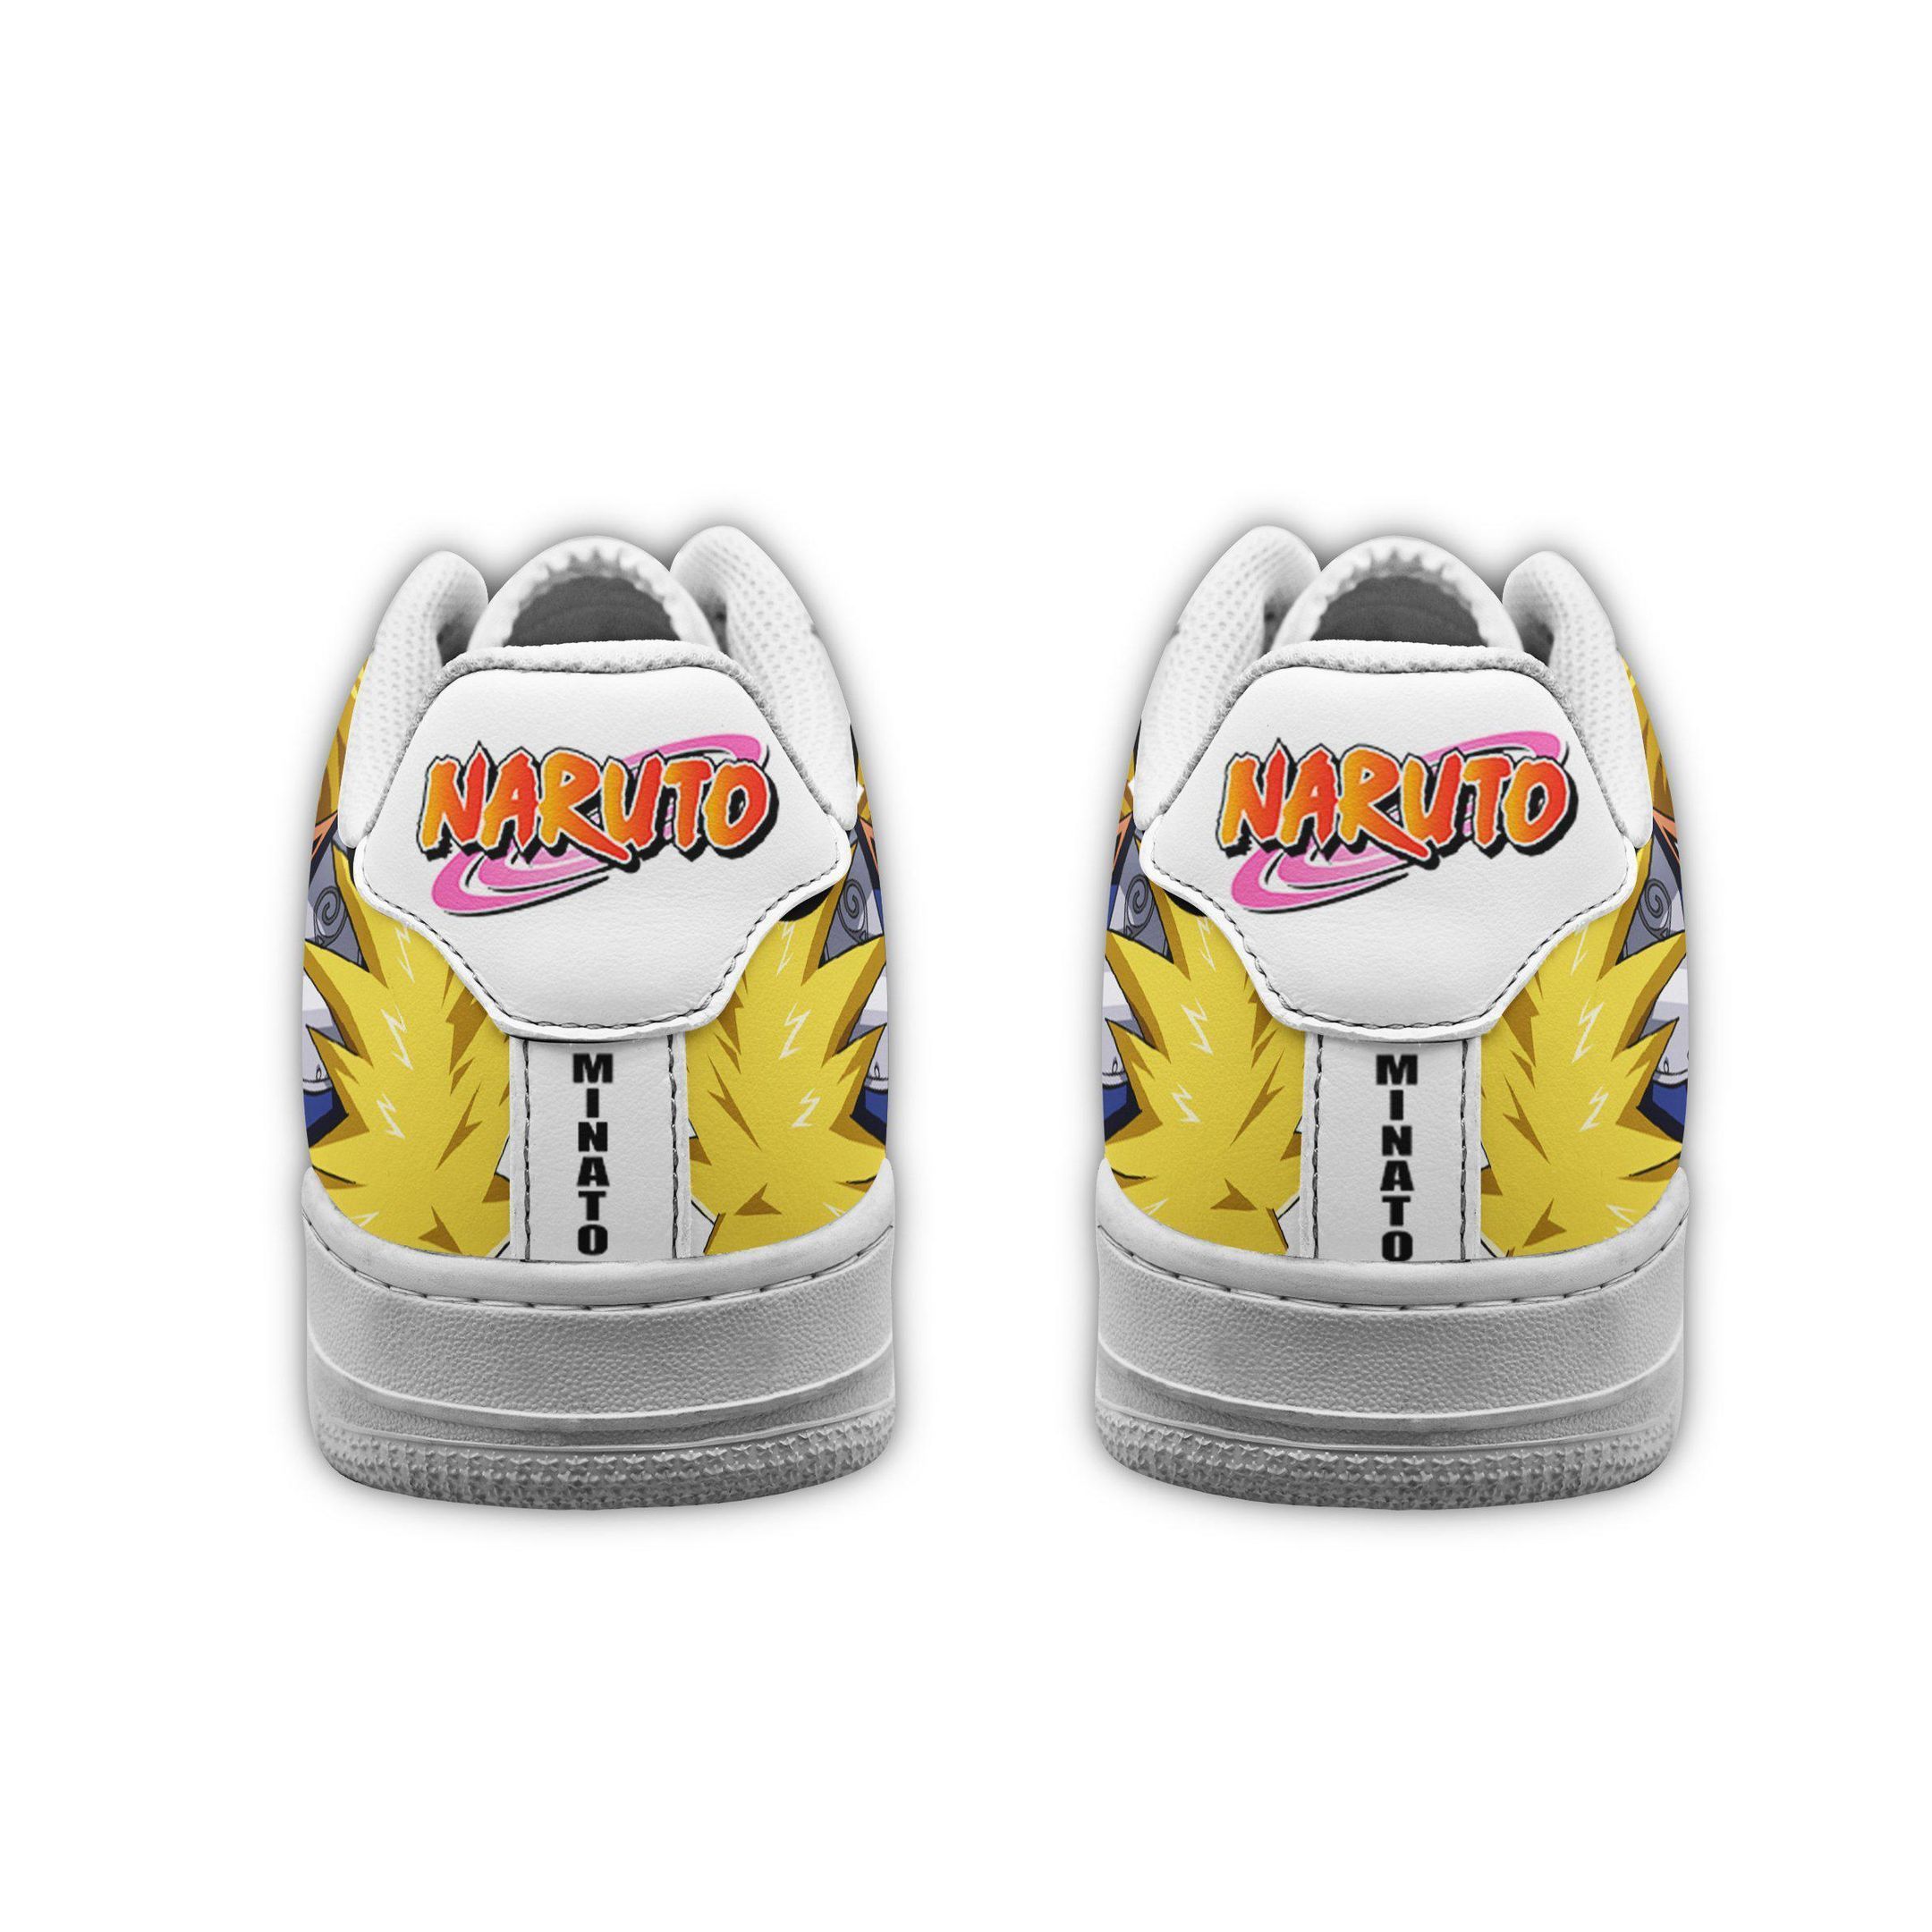 Minato Air Shoes Naruto Anime Shoes Fan Gift GO1012